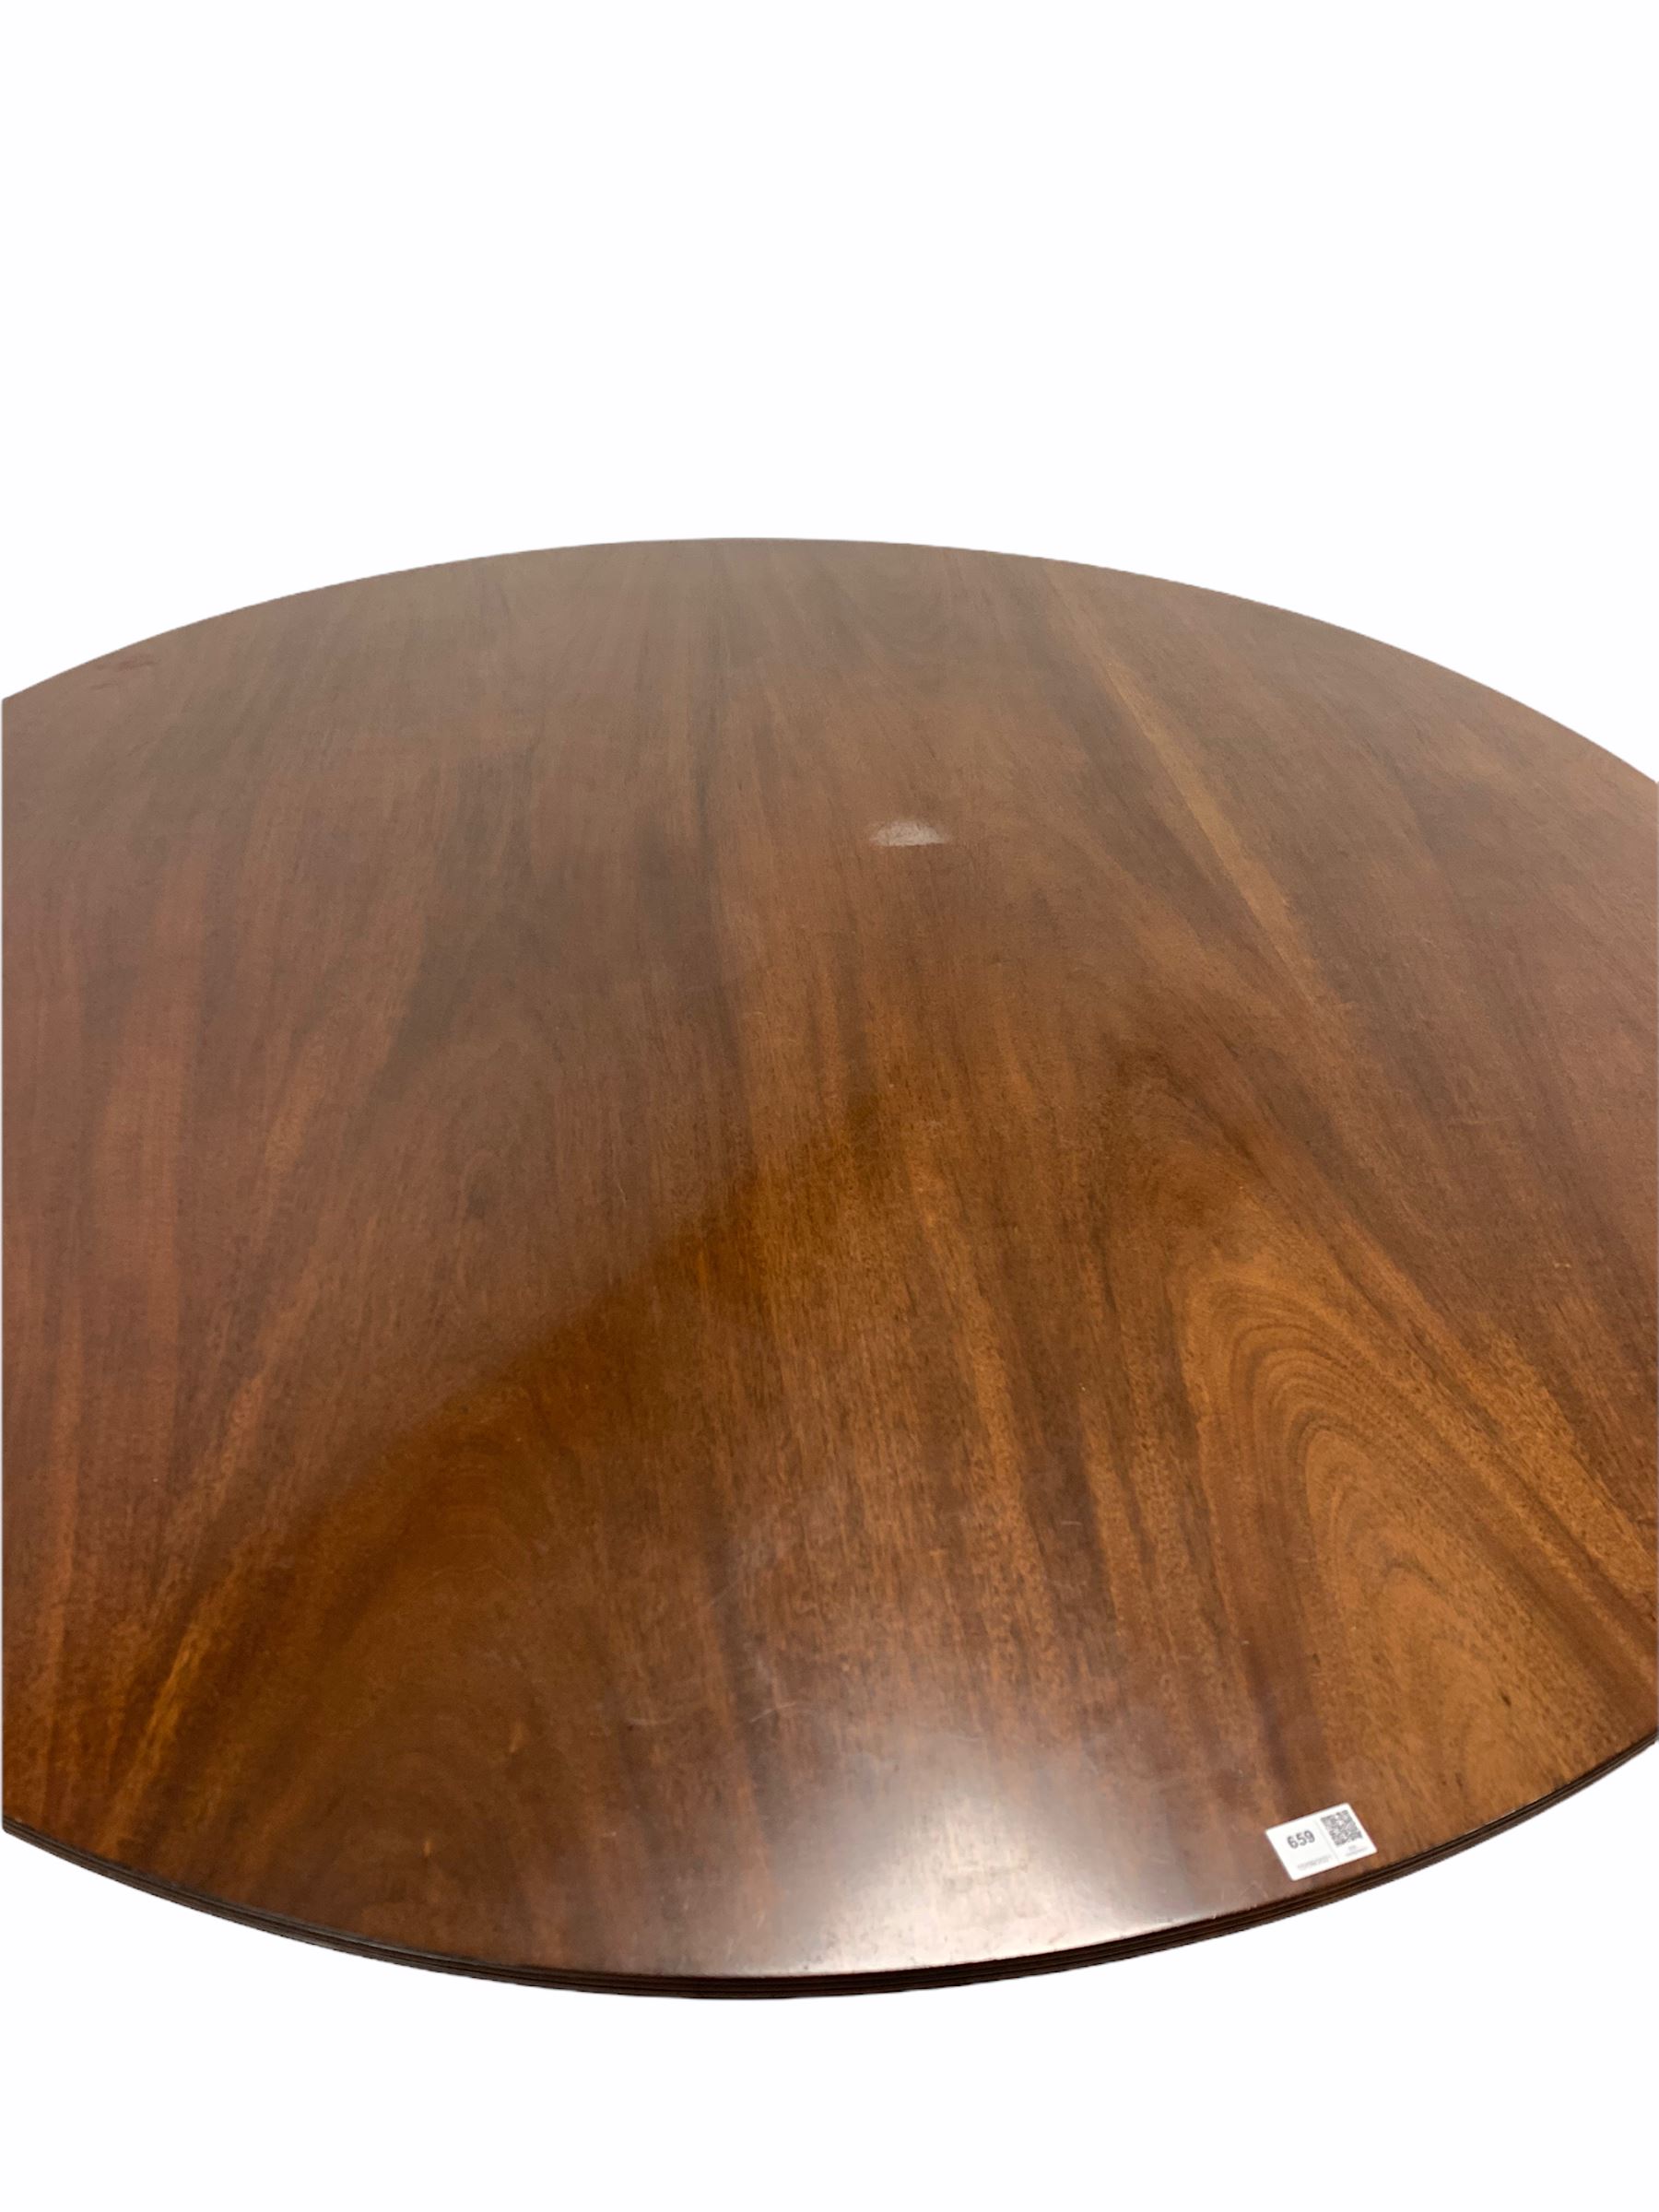 Georgian style mahogany circular dining table - Image 2 of 3